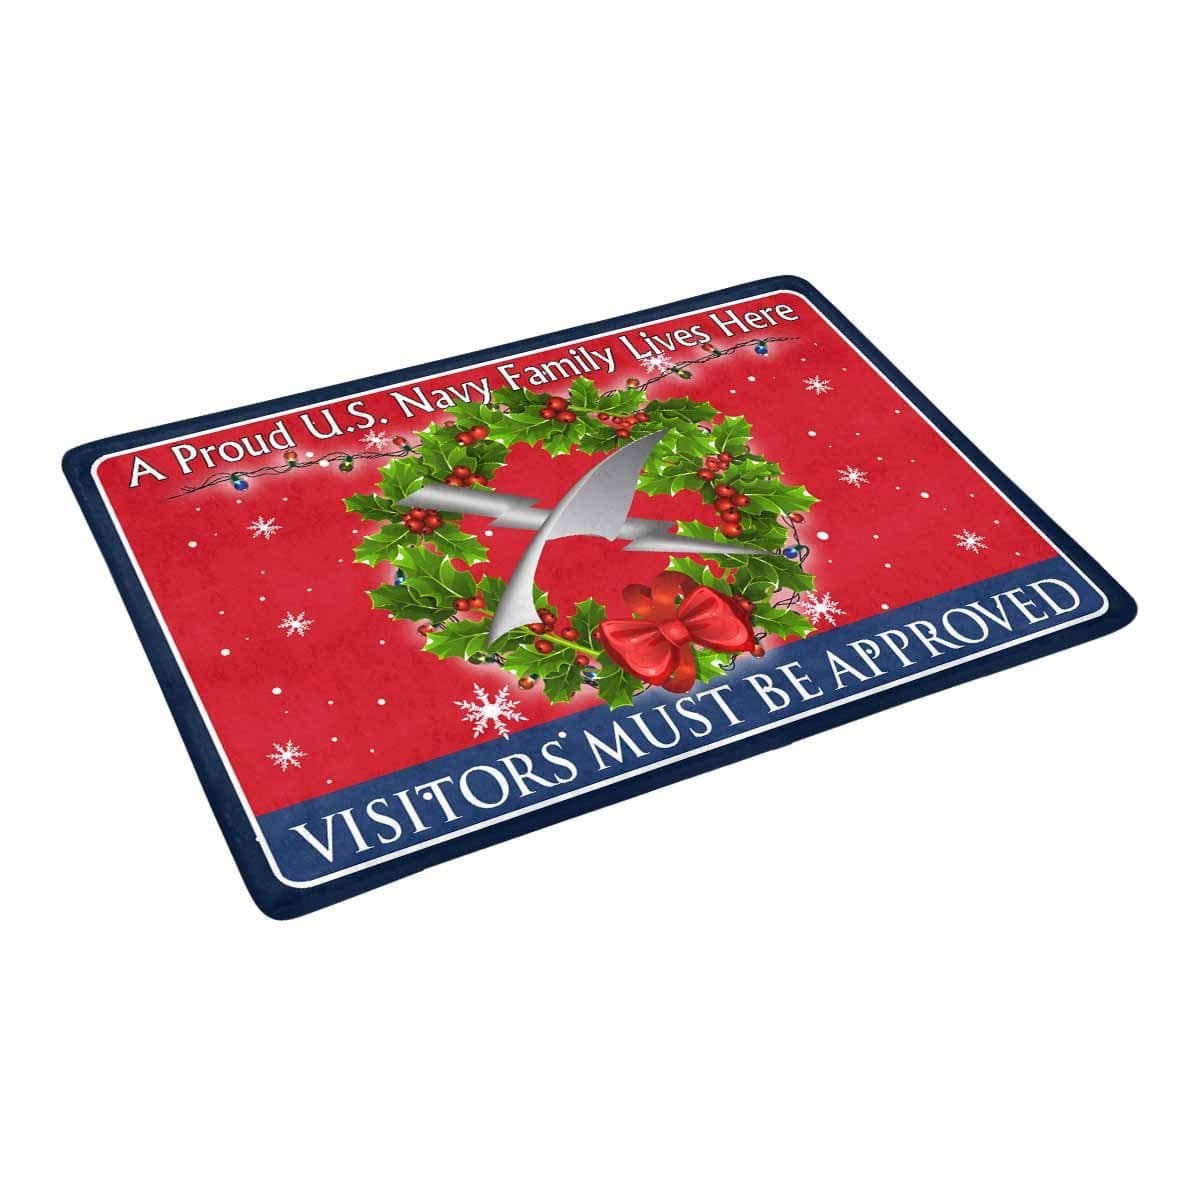 U.S Navy Cryptologic technician Navy CT - Visitors must be approved - Christmas Doormat-Doormat-Navy-Rate-Veterans Nation